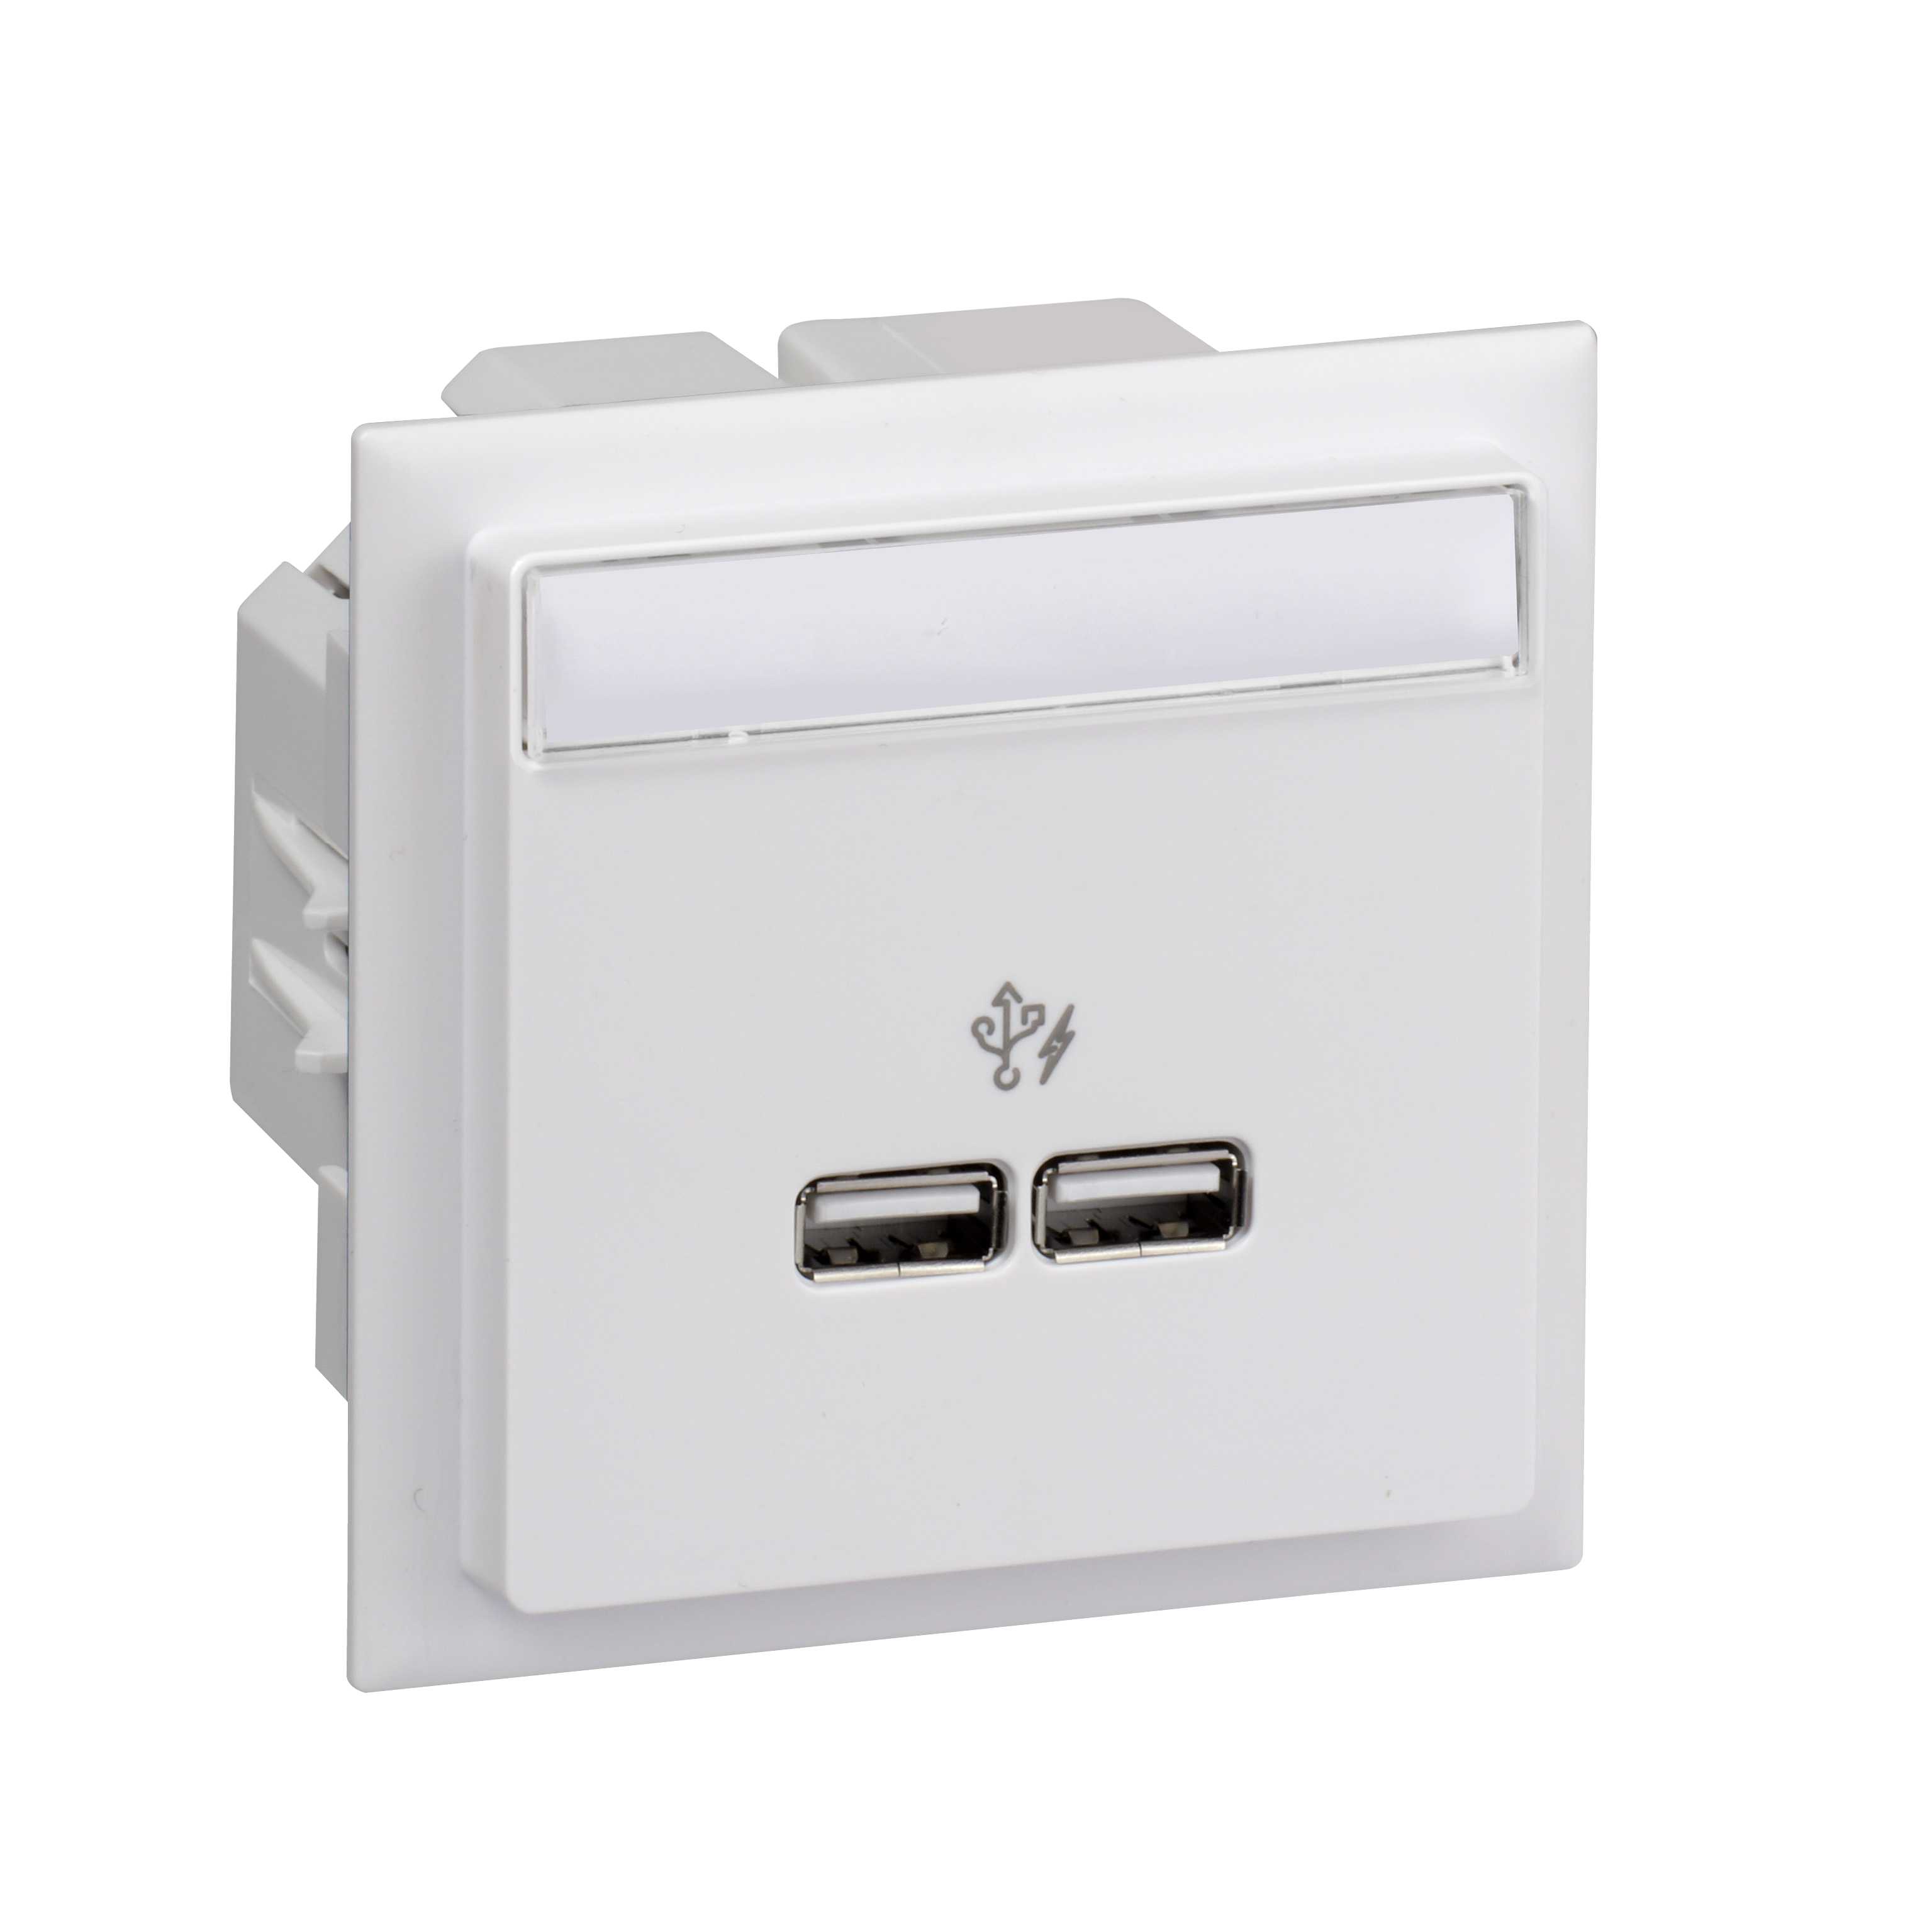 Thorsman - CYB USB Type A lader i hvit levert i komplett boks. 2 USB utganger 2,4 A / 5 VDC